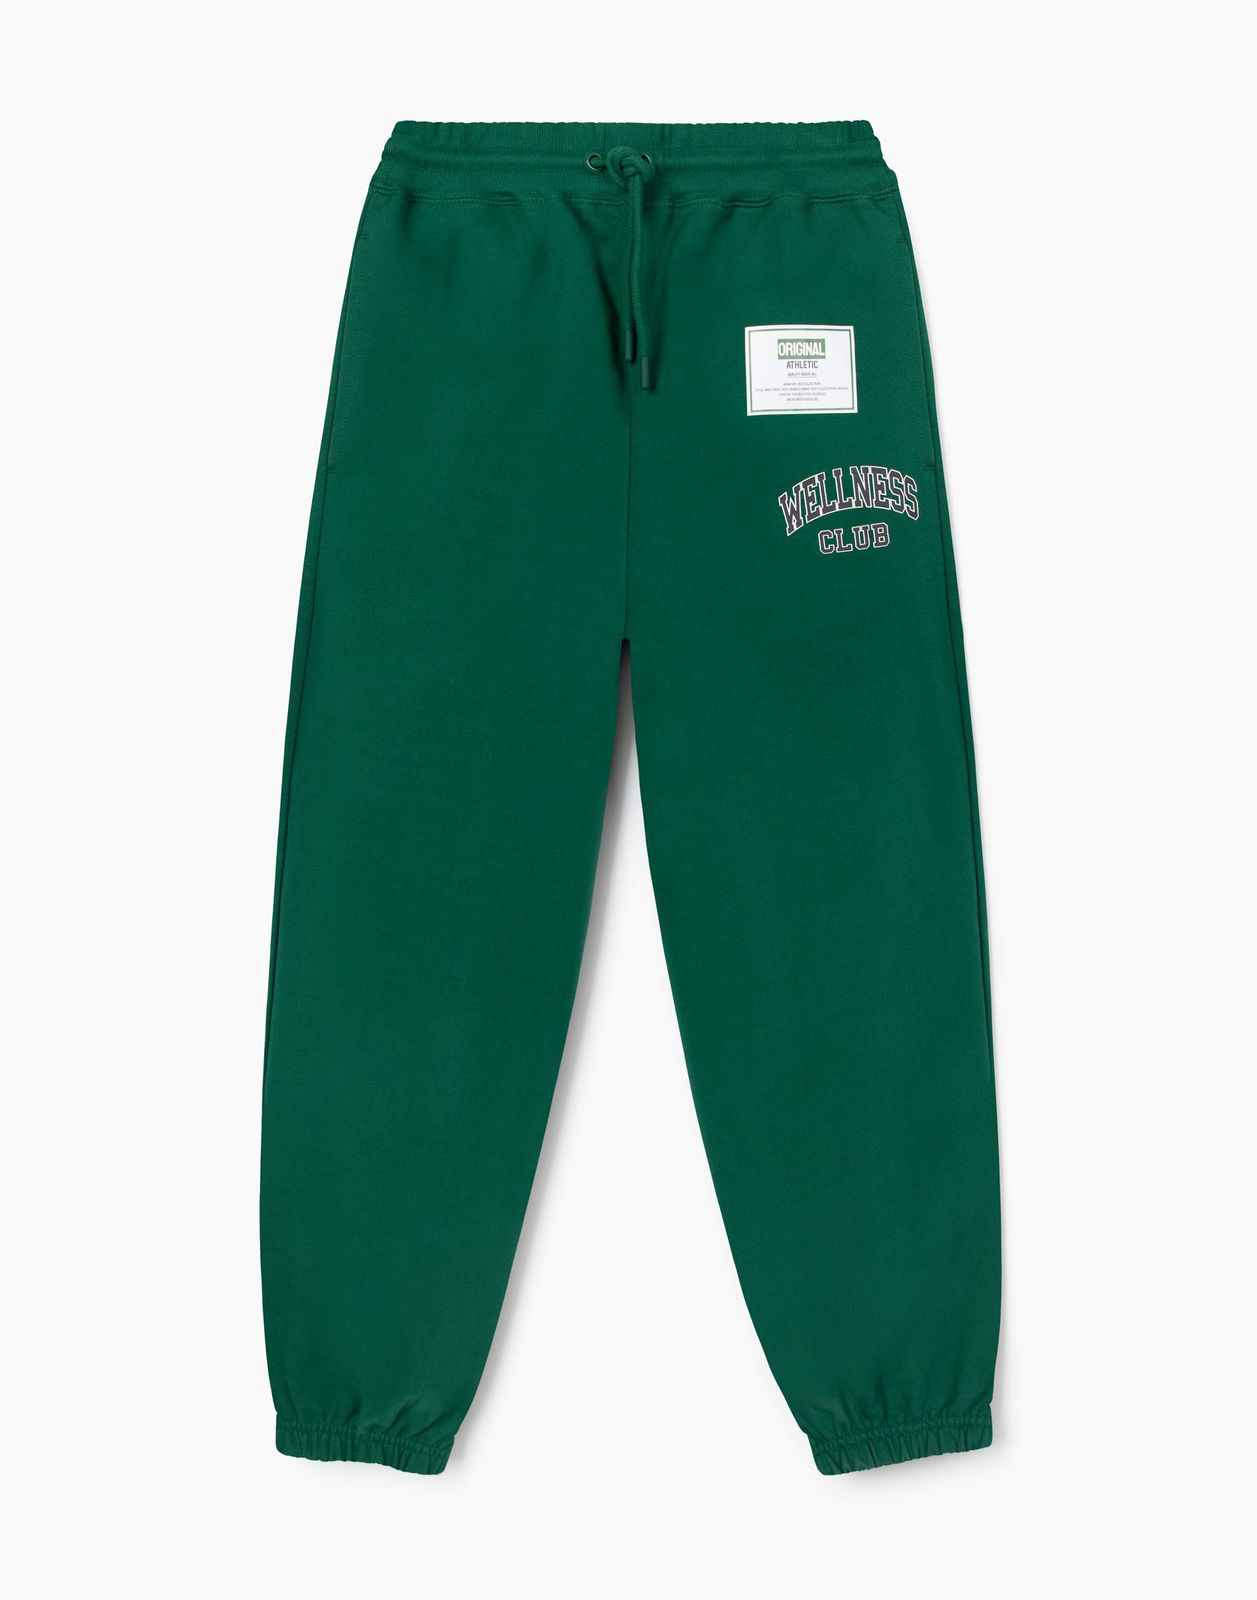 Спортивные брюки мужские Gloria Jeans BAC012902 темно-зеленый XS/176